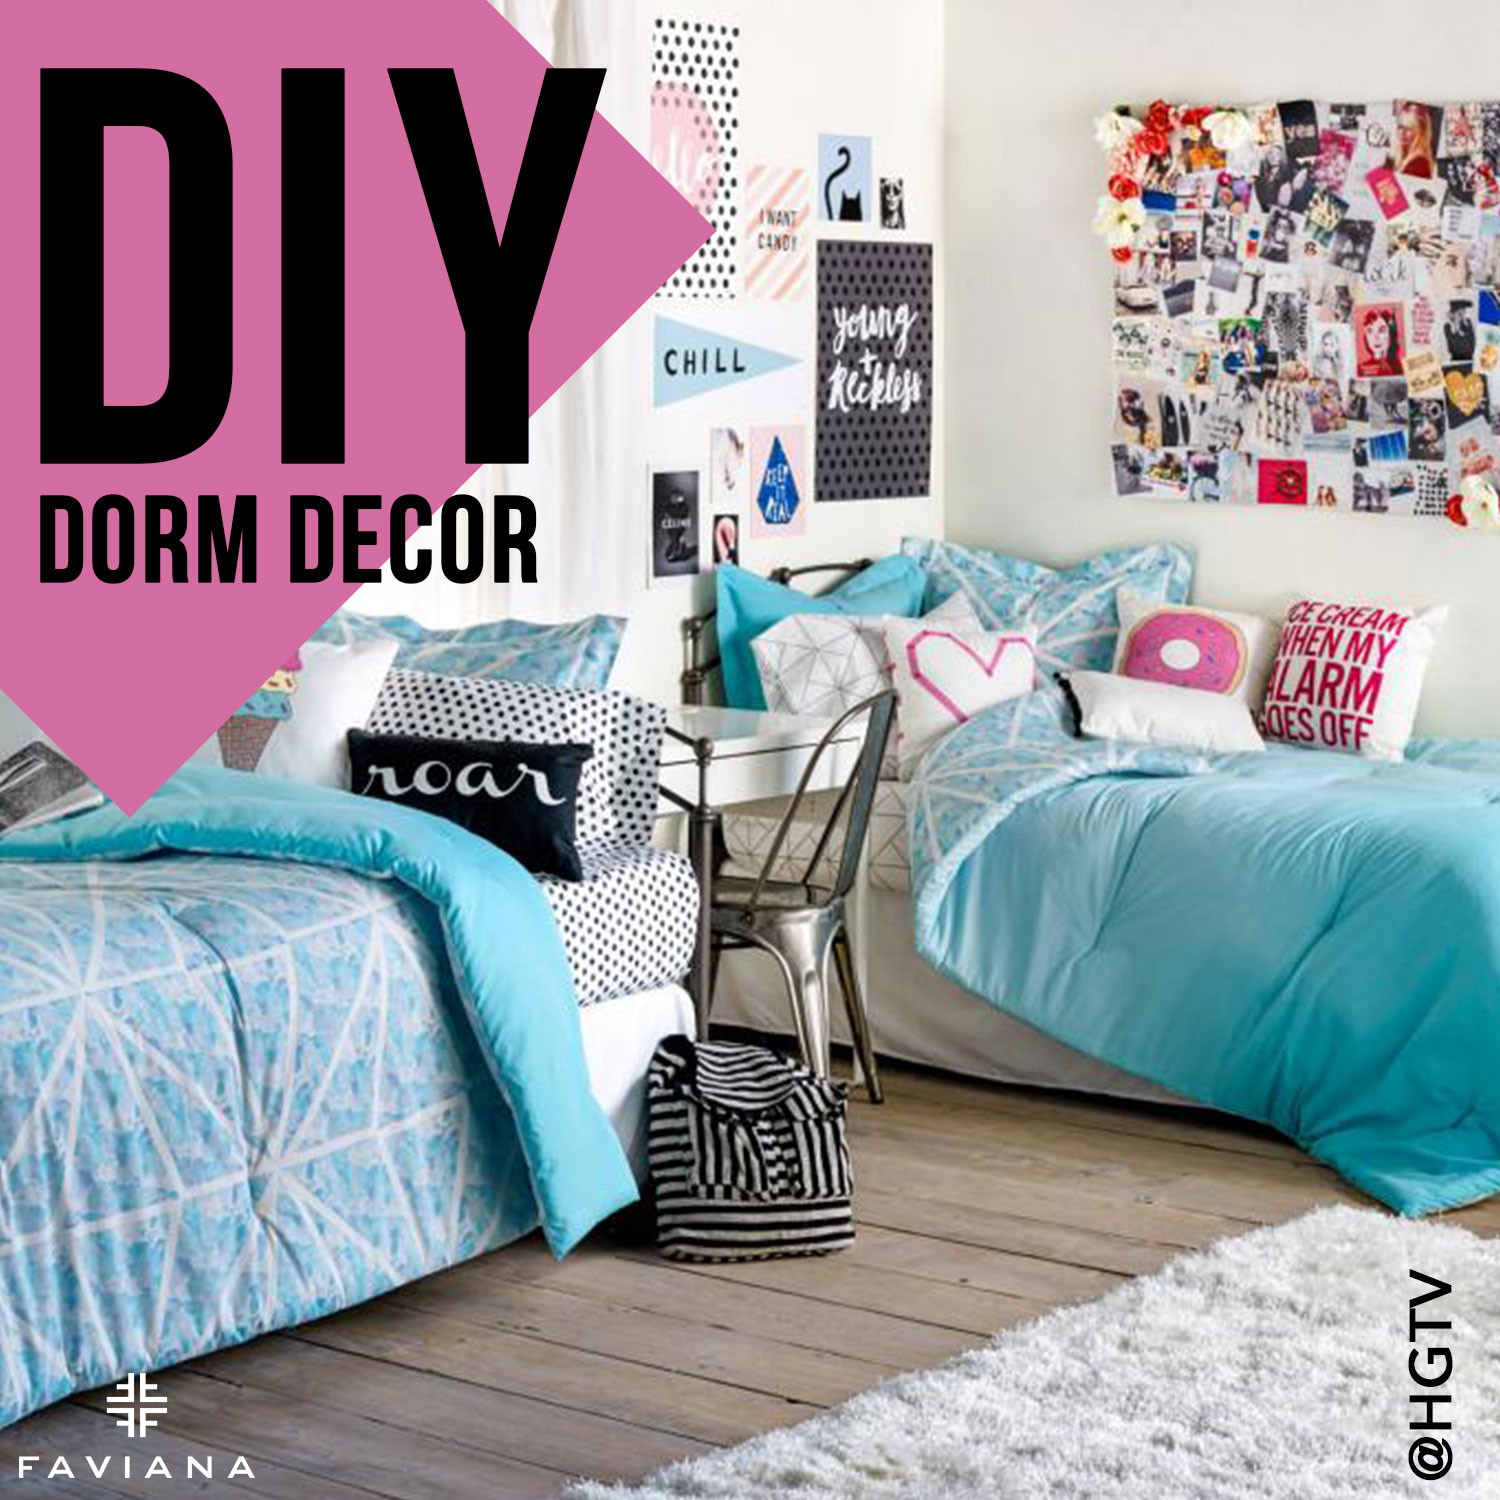 Best ideas about DIY Dorm Room Decor
. Save or Pin DIY Dorm Decor Now.